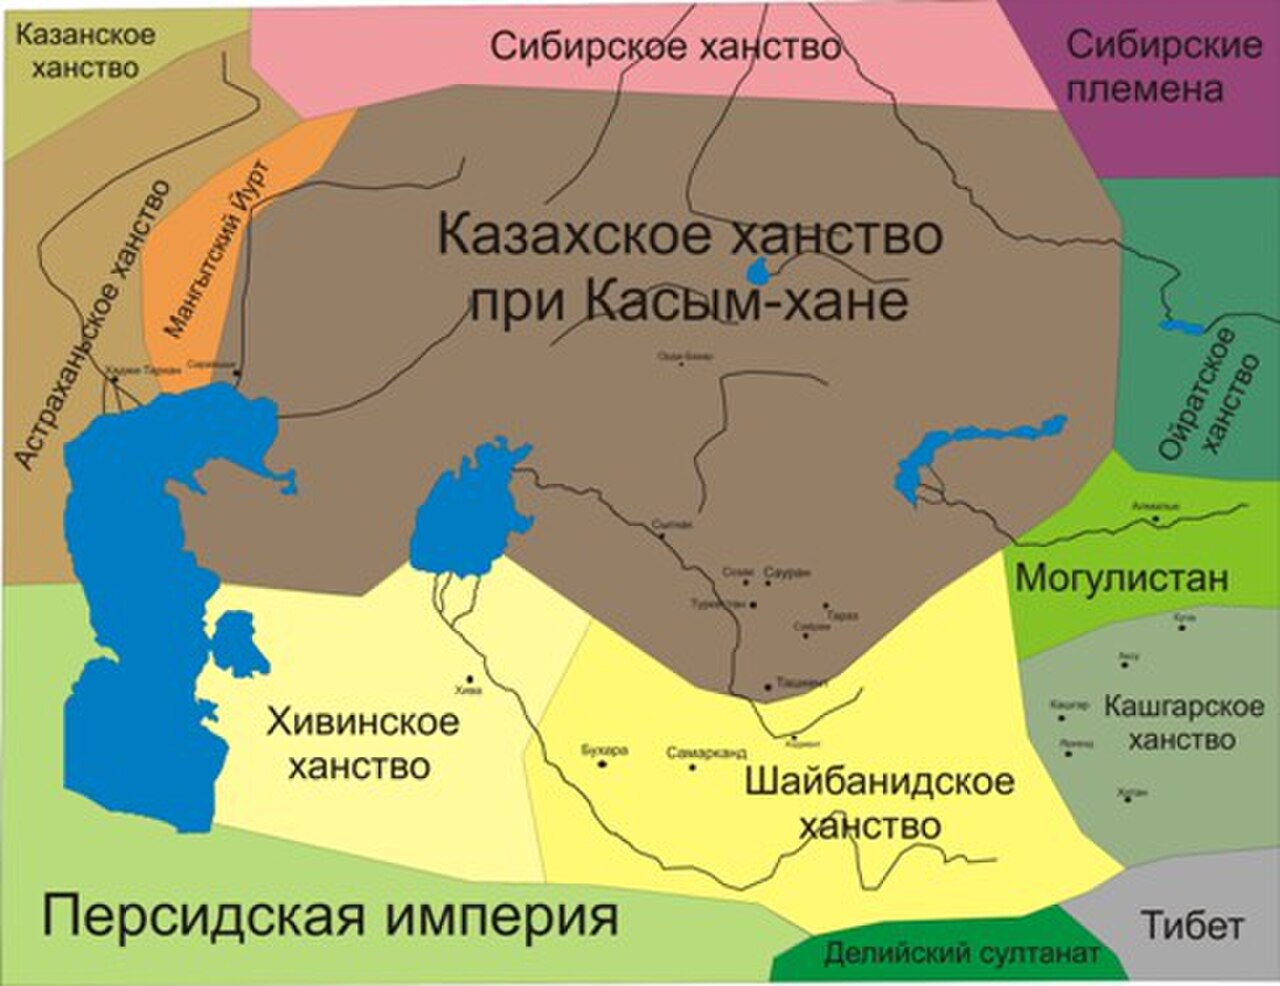 Внешняя политика казахского ханства при хакназар хане. Карта казахского ханства при Касым Хане. Казахское ханство при Касым Хане. Хан казахского ханства. Казахское ханство карта.